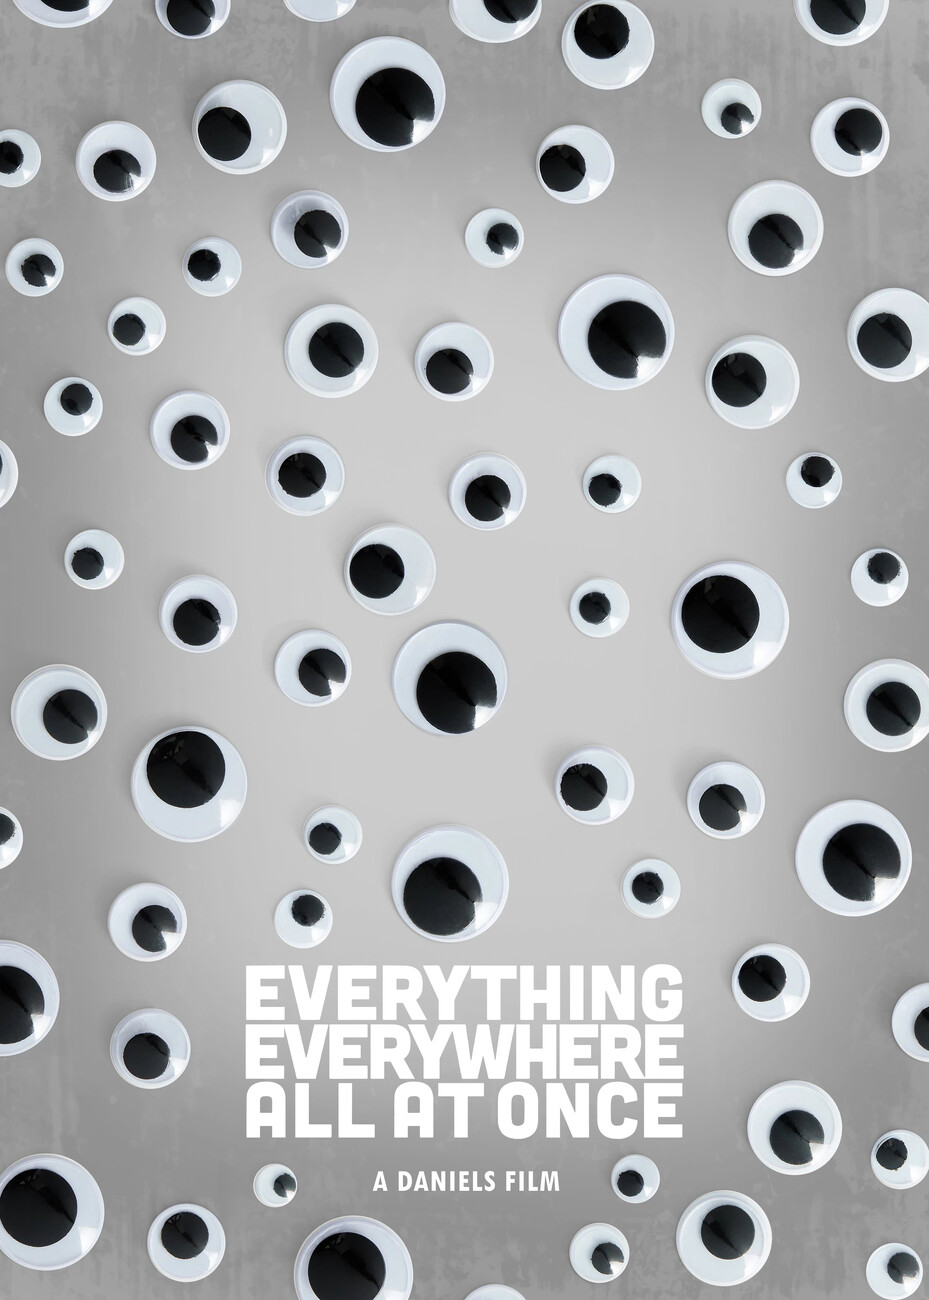 Everywhere, Everything lyrics | Sticker